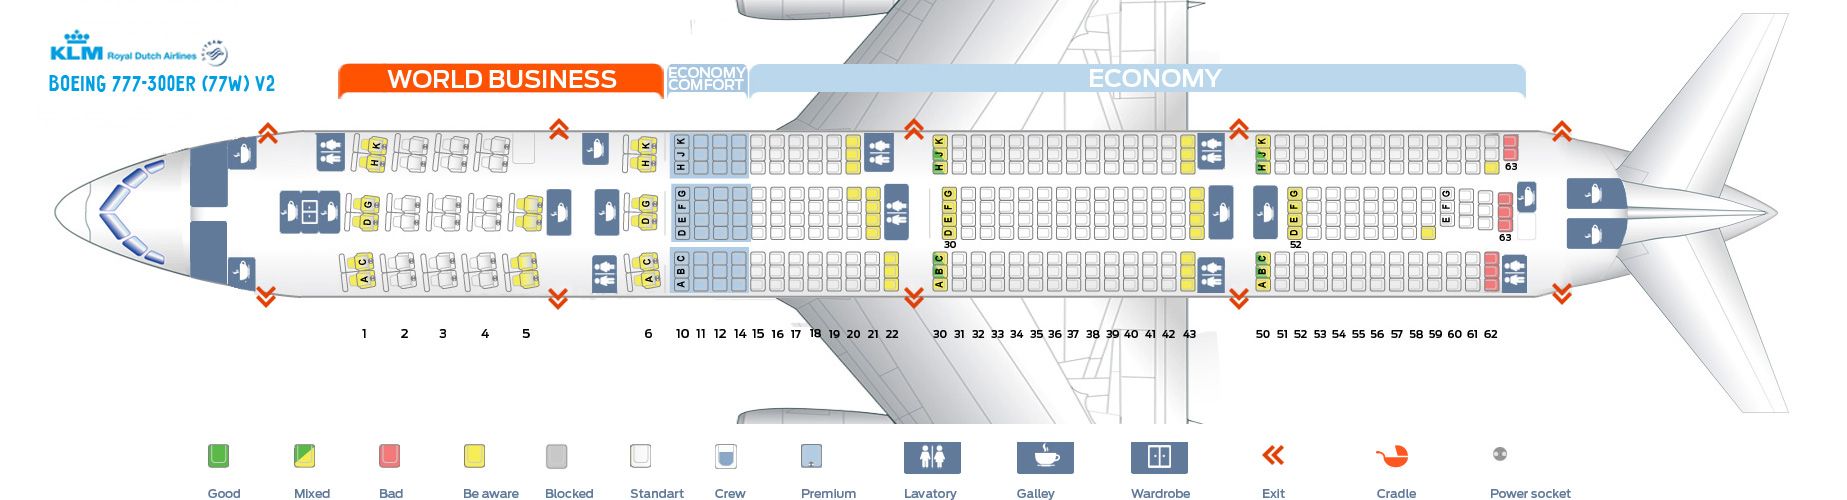 klm boeing 777-300 seat map